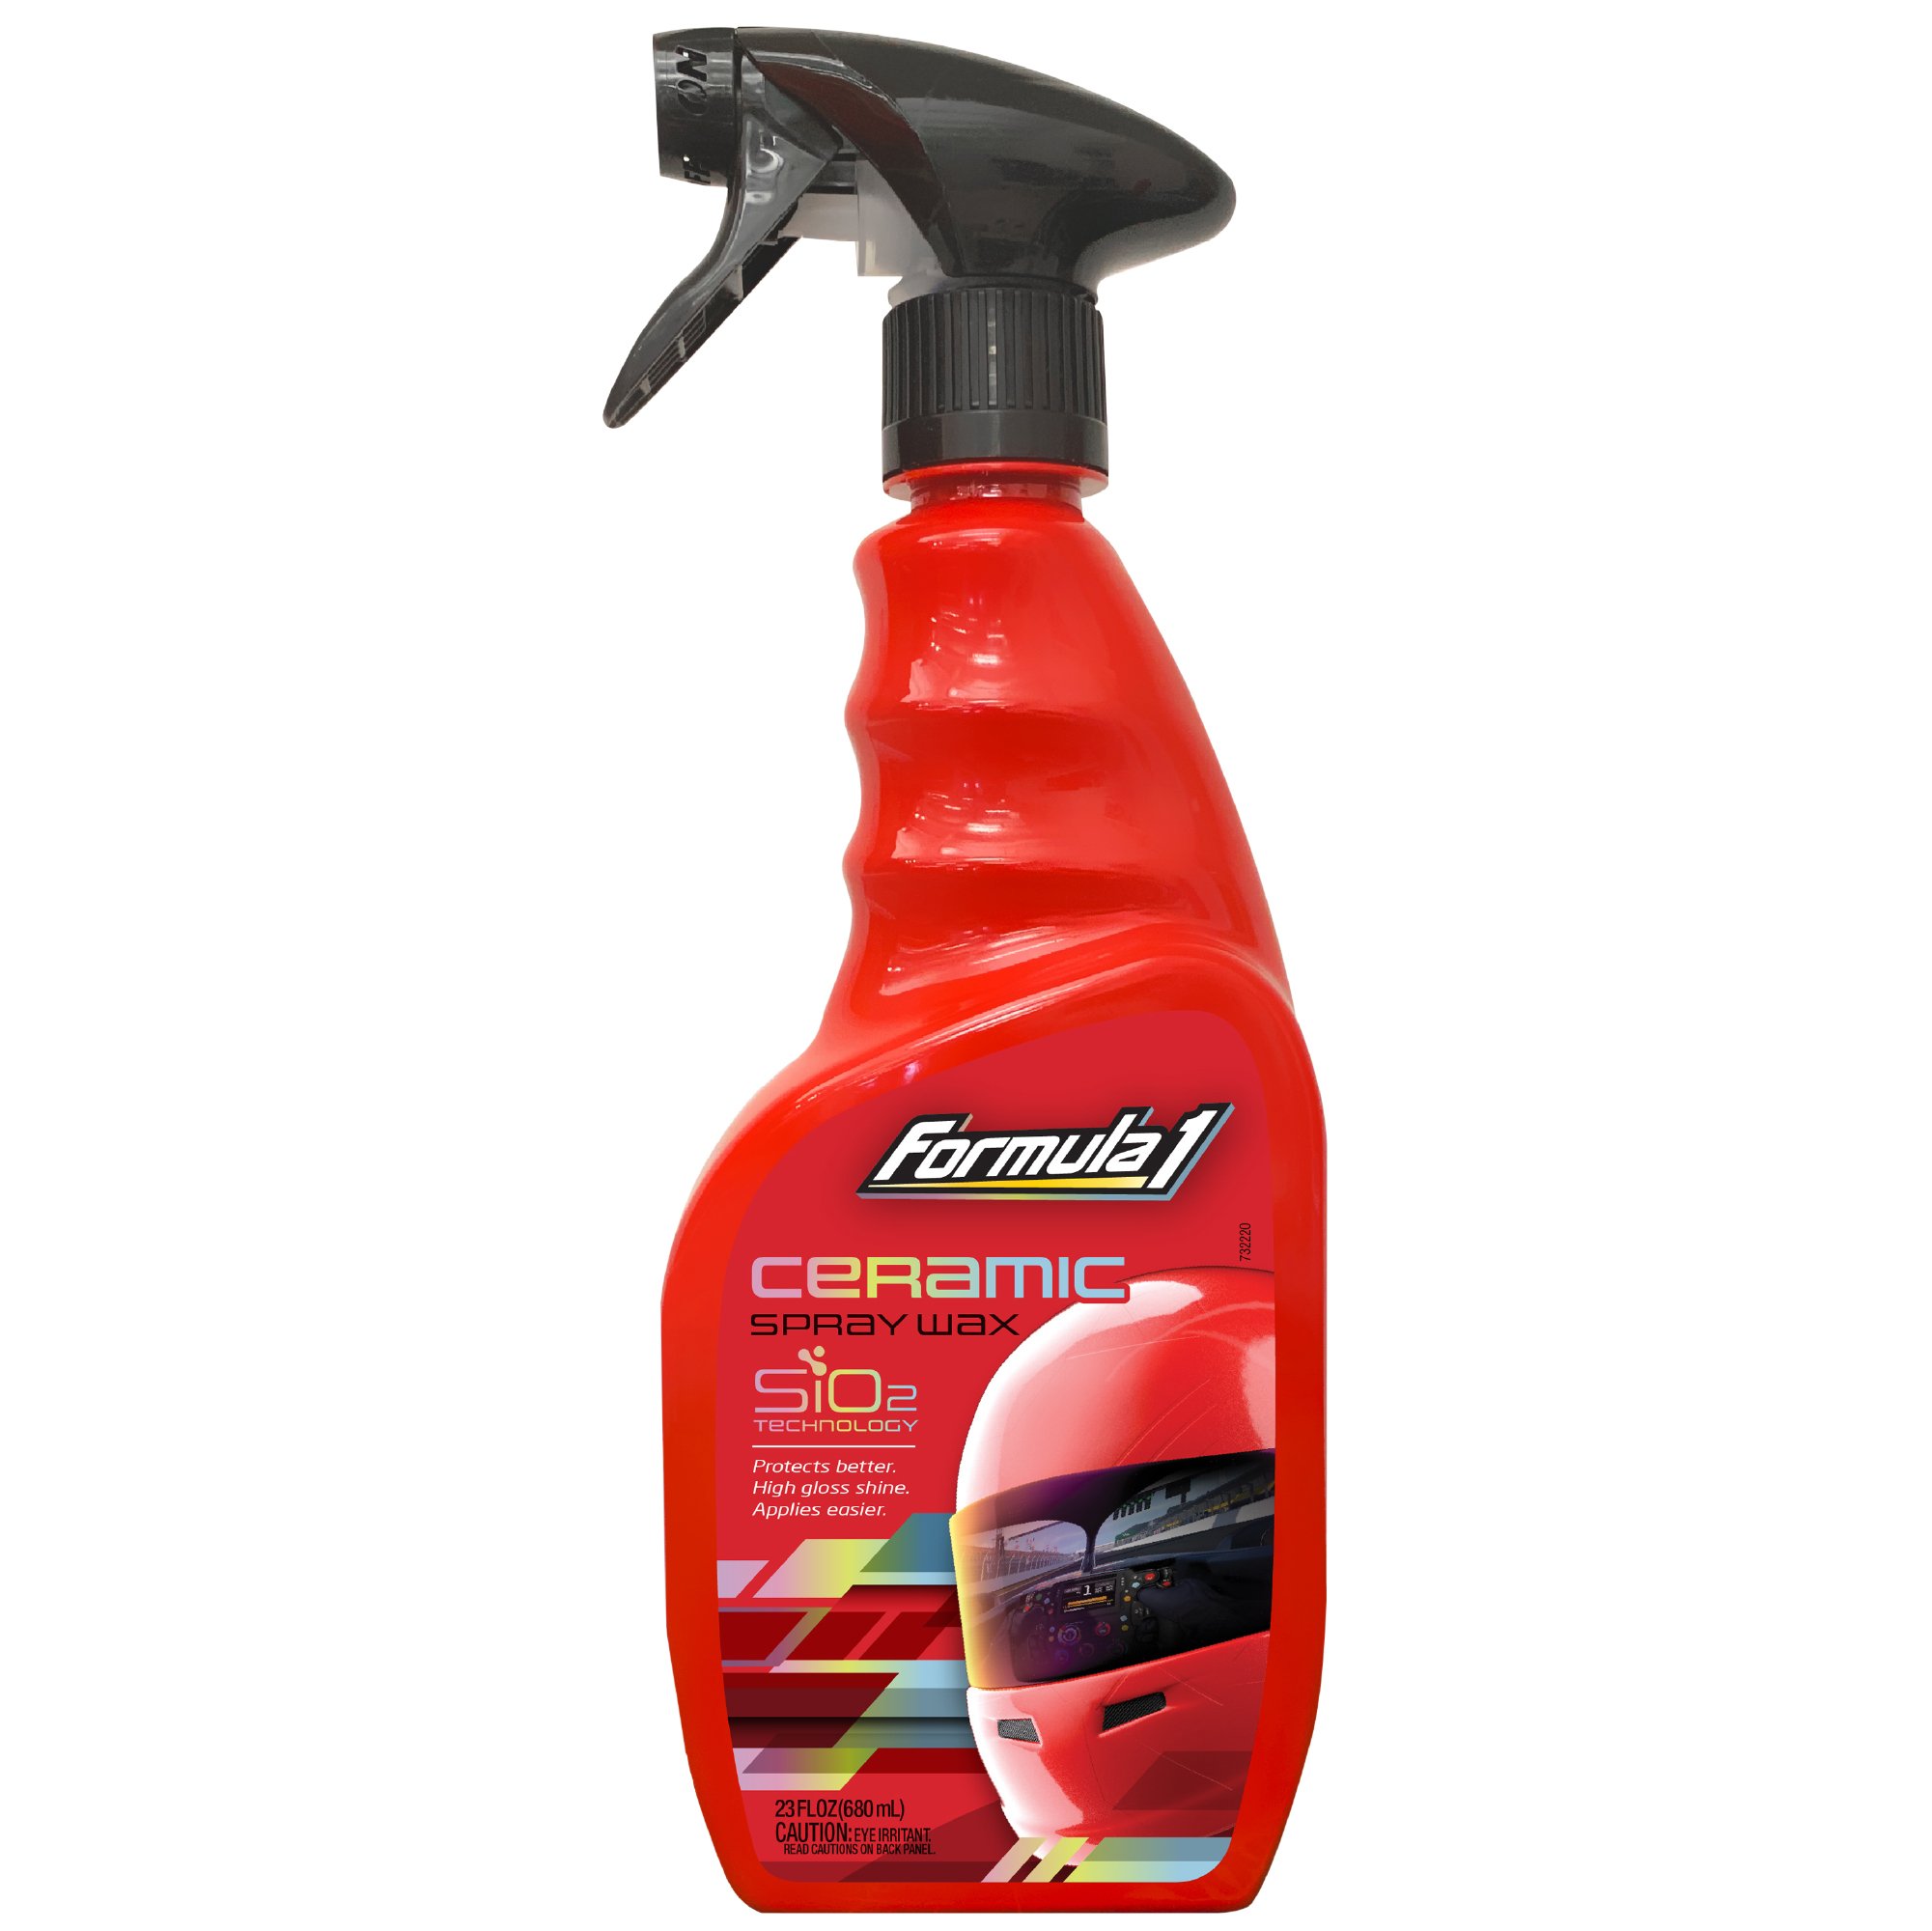 Formula 1 Ceramic Spray Wax - Shop Automotive Cleaners at H-E-B